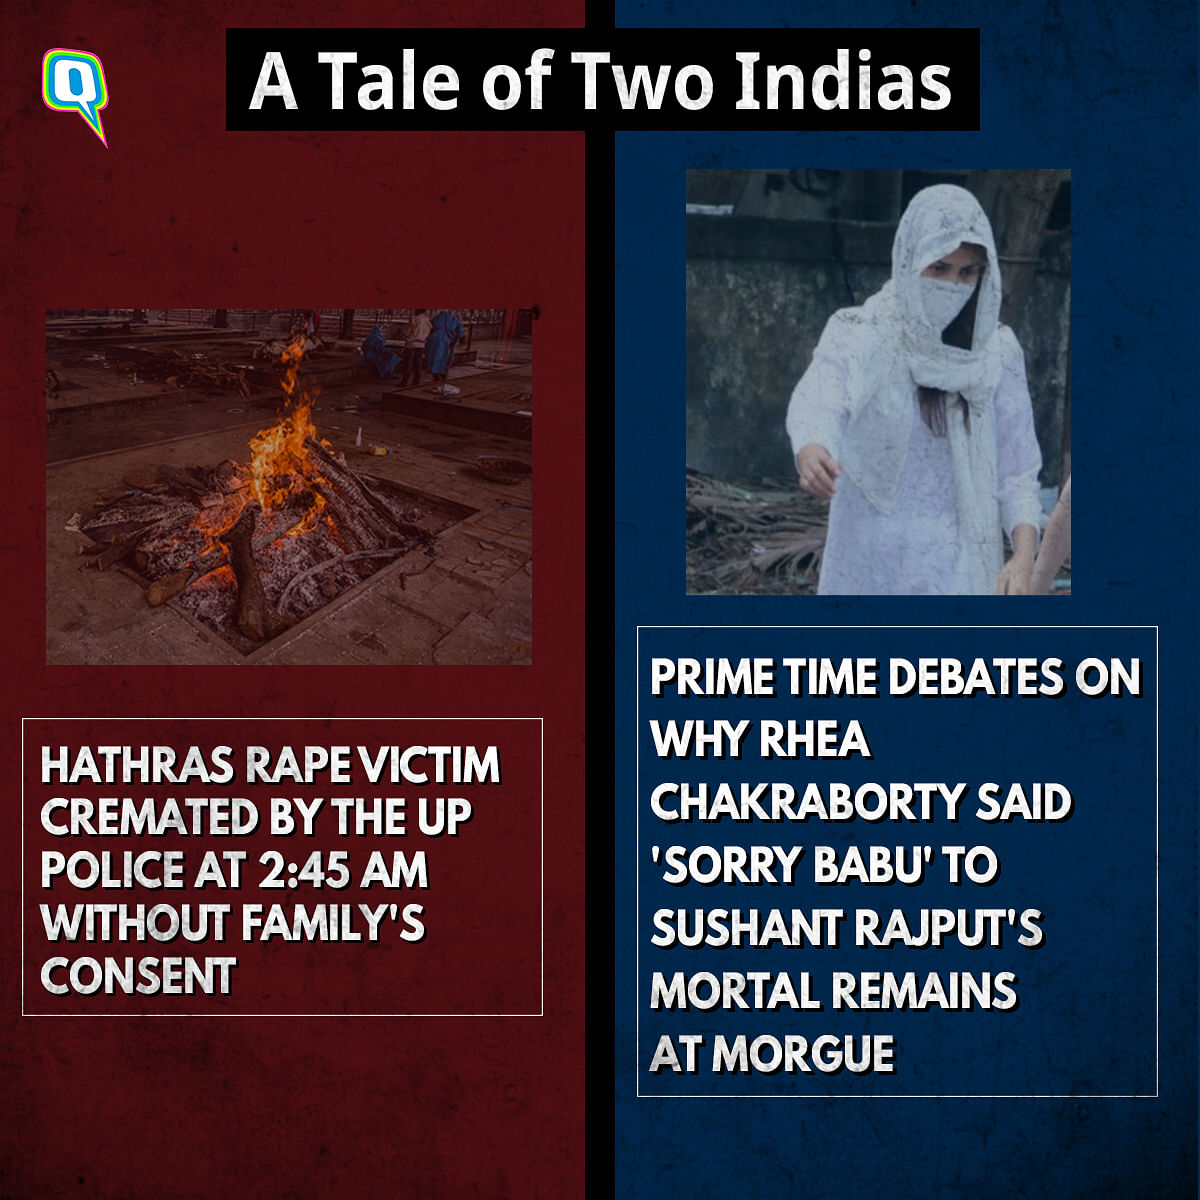 Different tragedies, different Indias.